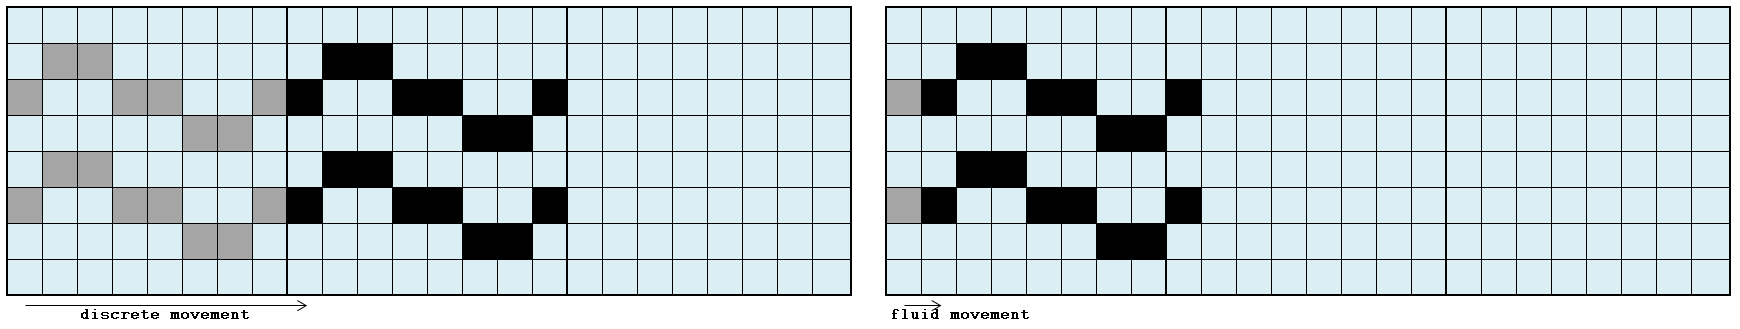 tiling_movements.png